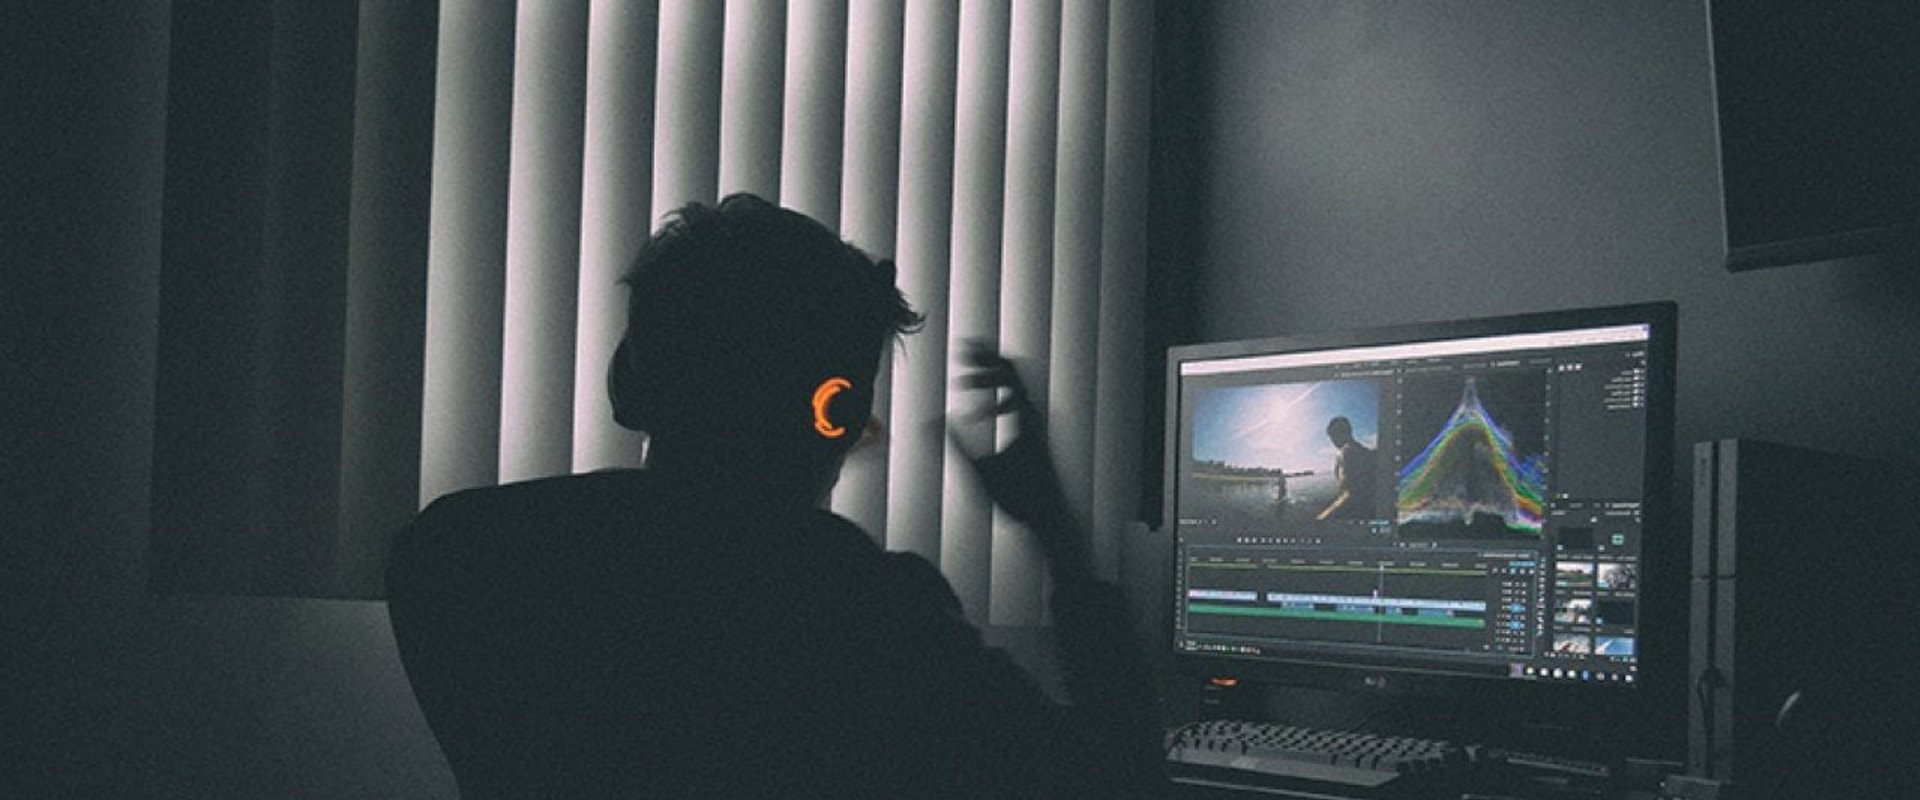 Understanding the Basics of Video Editing